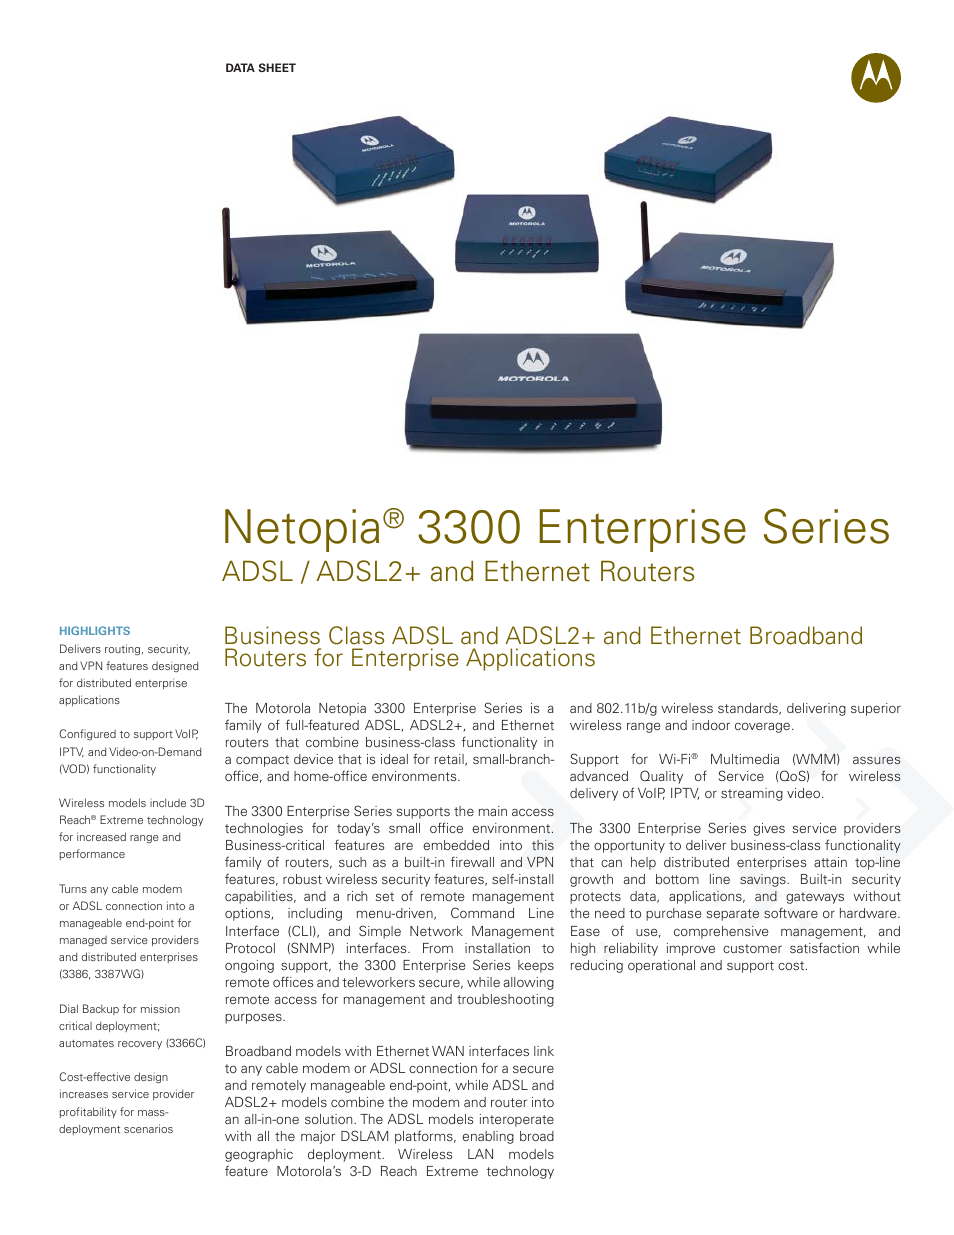 Netopia Enterprise Series